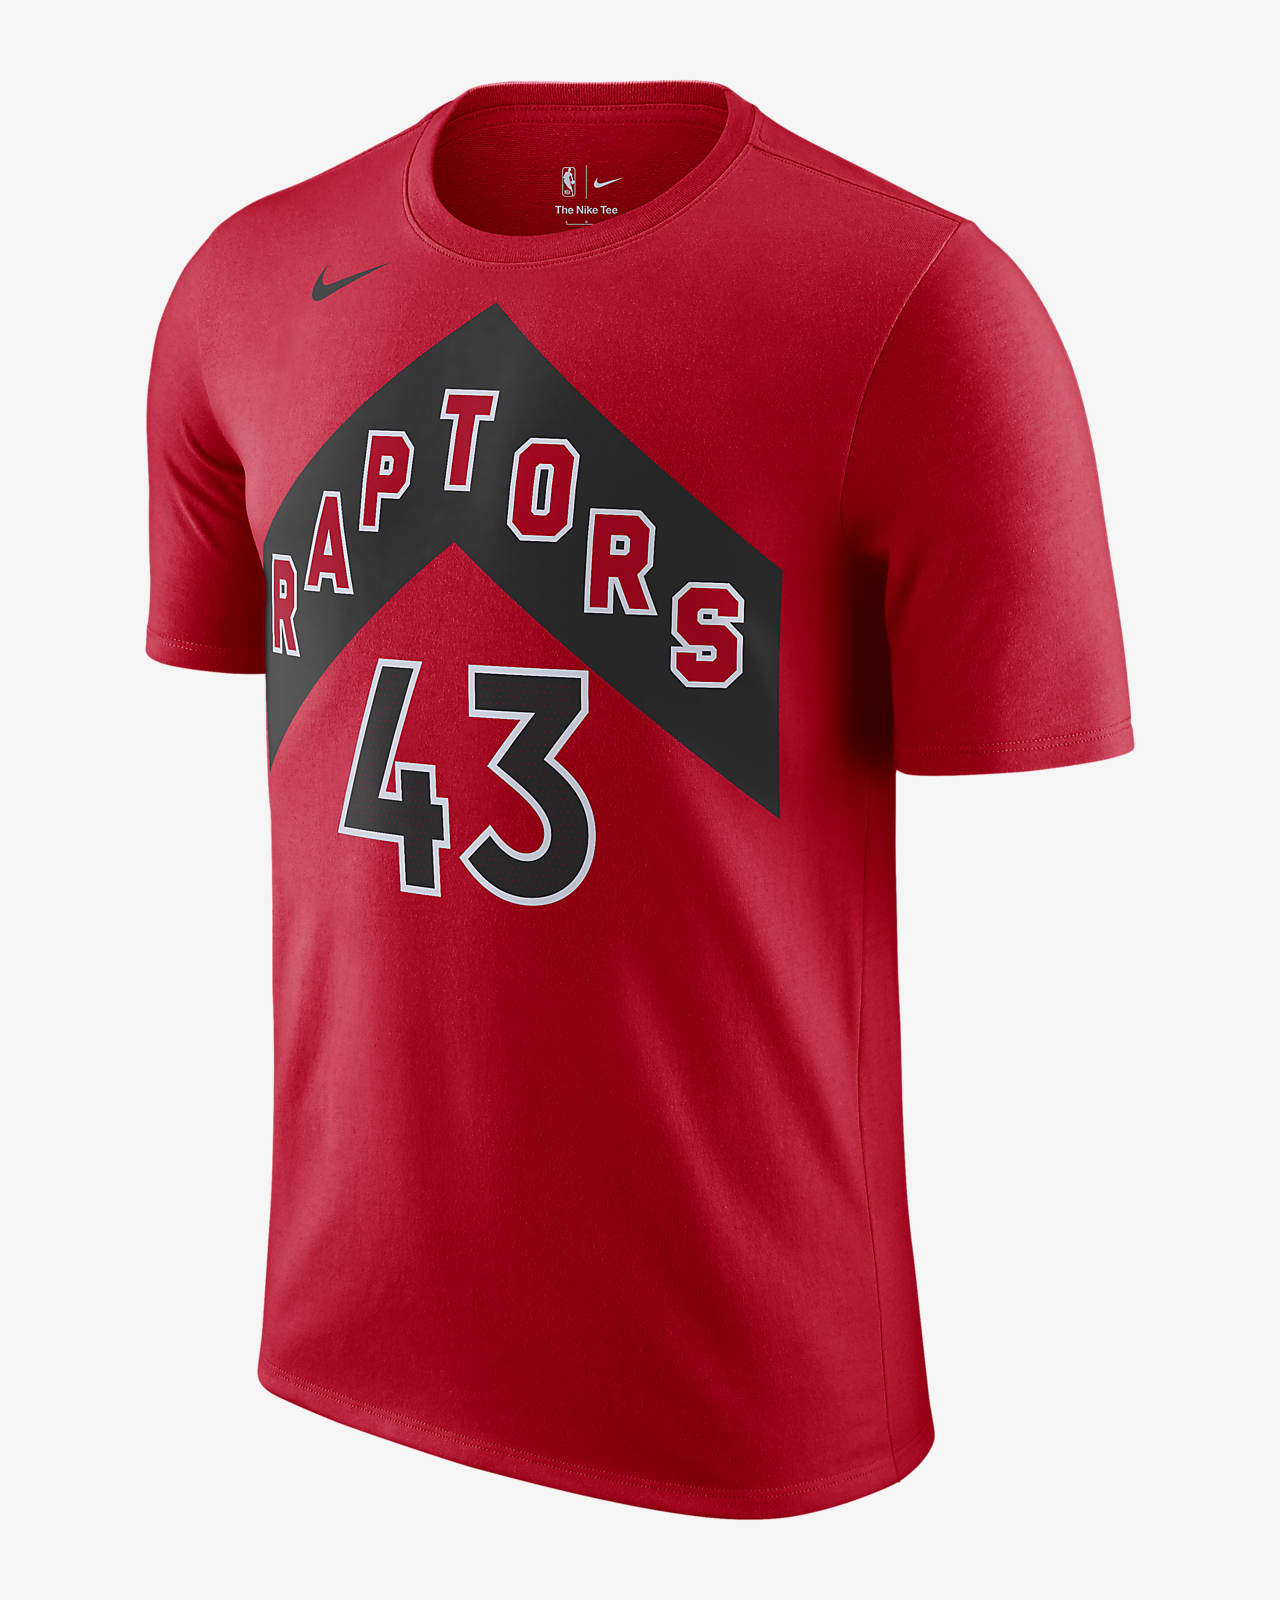 Toronto Raptors Men's Nike NBA T-Shirt